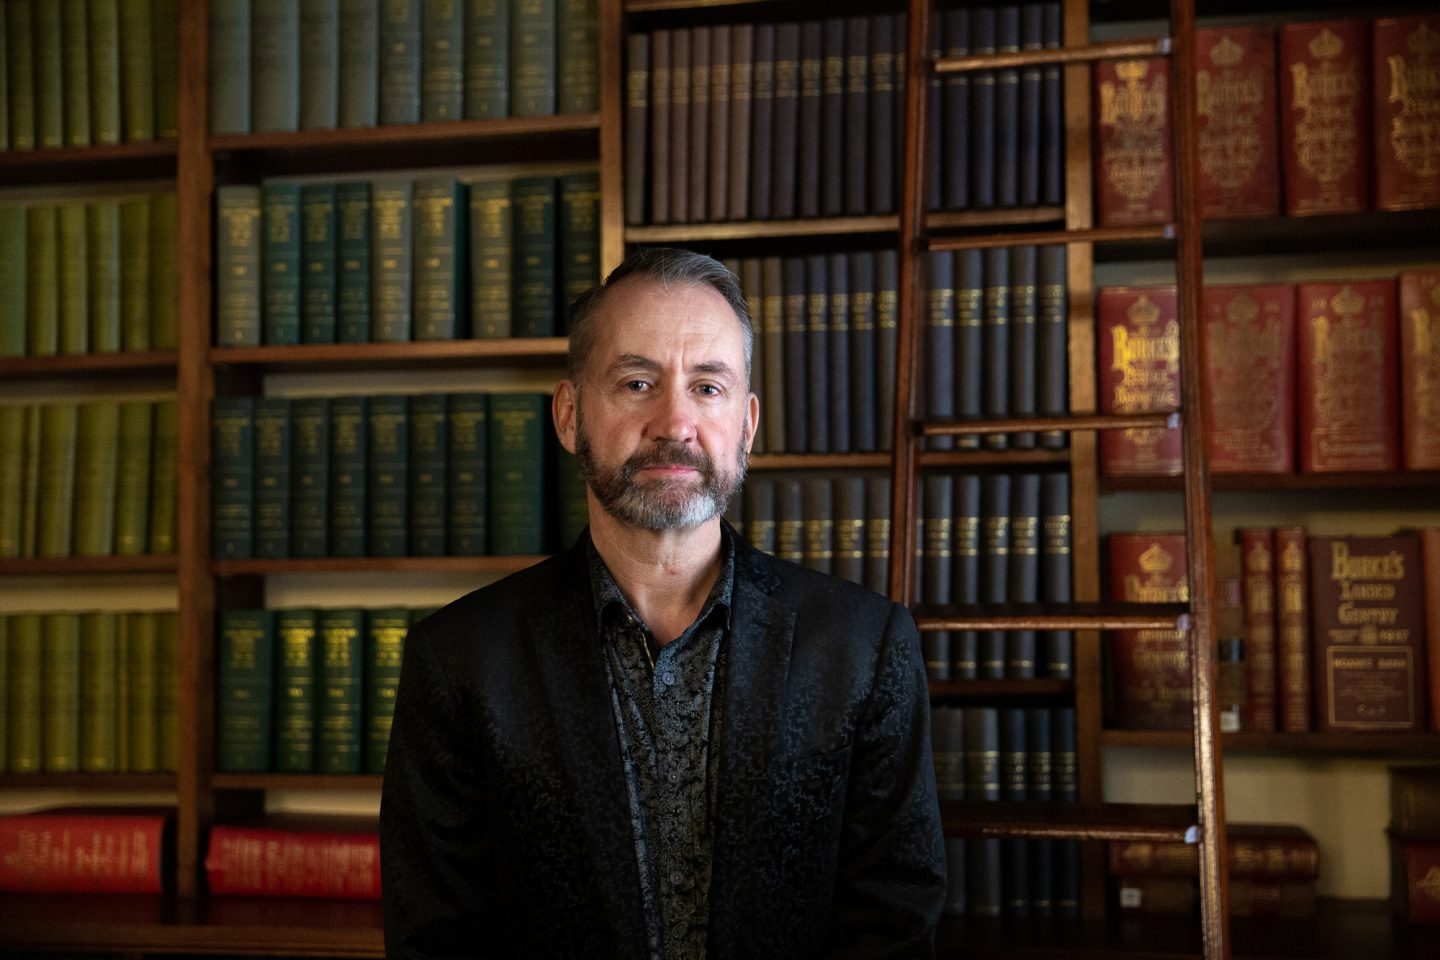 South Australia's Parliamentary Librarian Dr John Weste